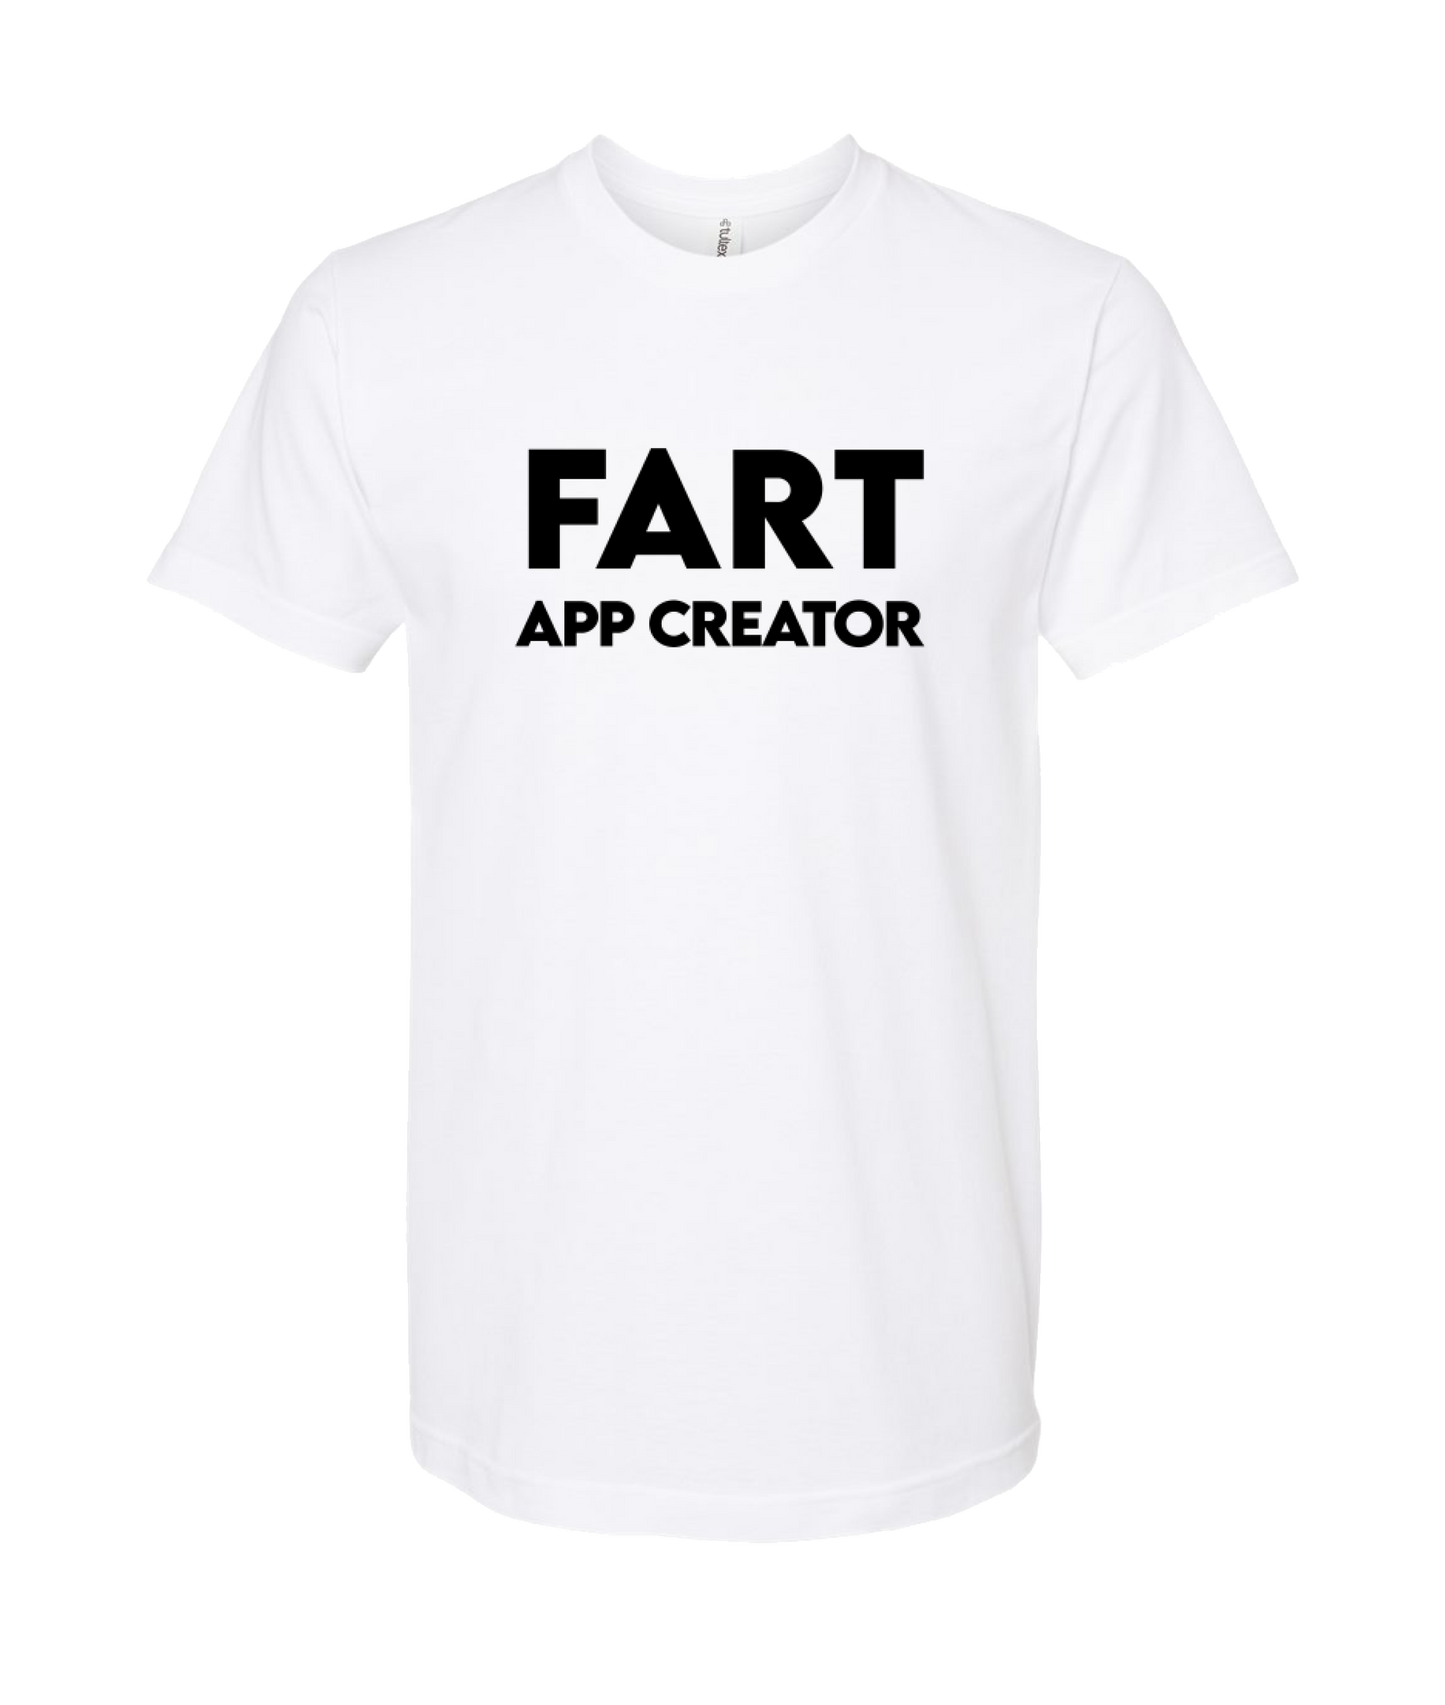 iFart - APP CREATOR - White T Shirt